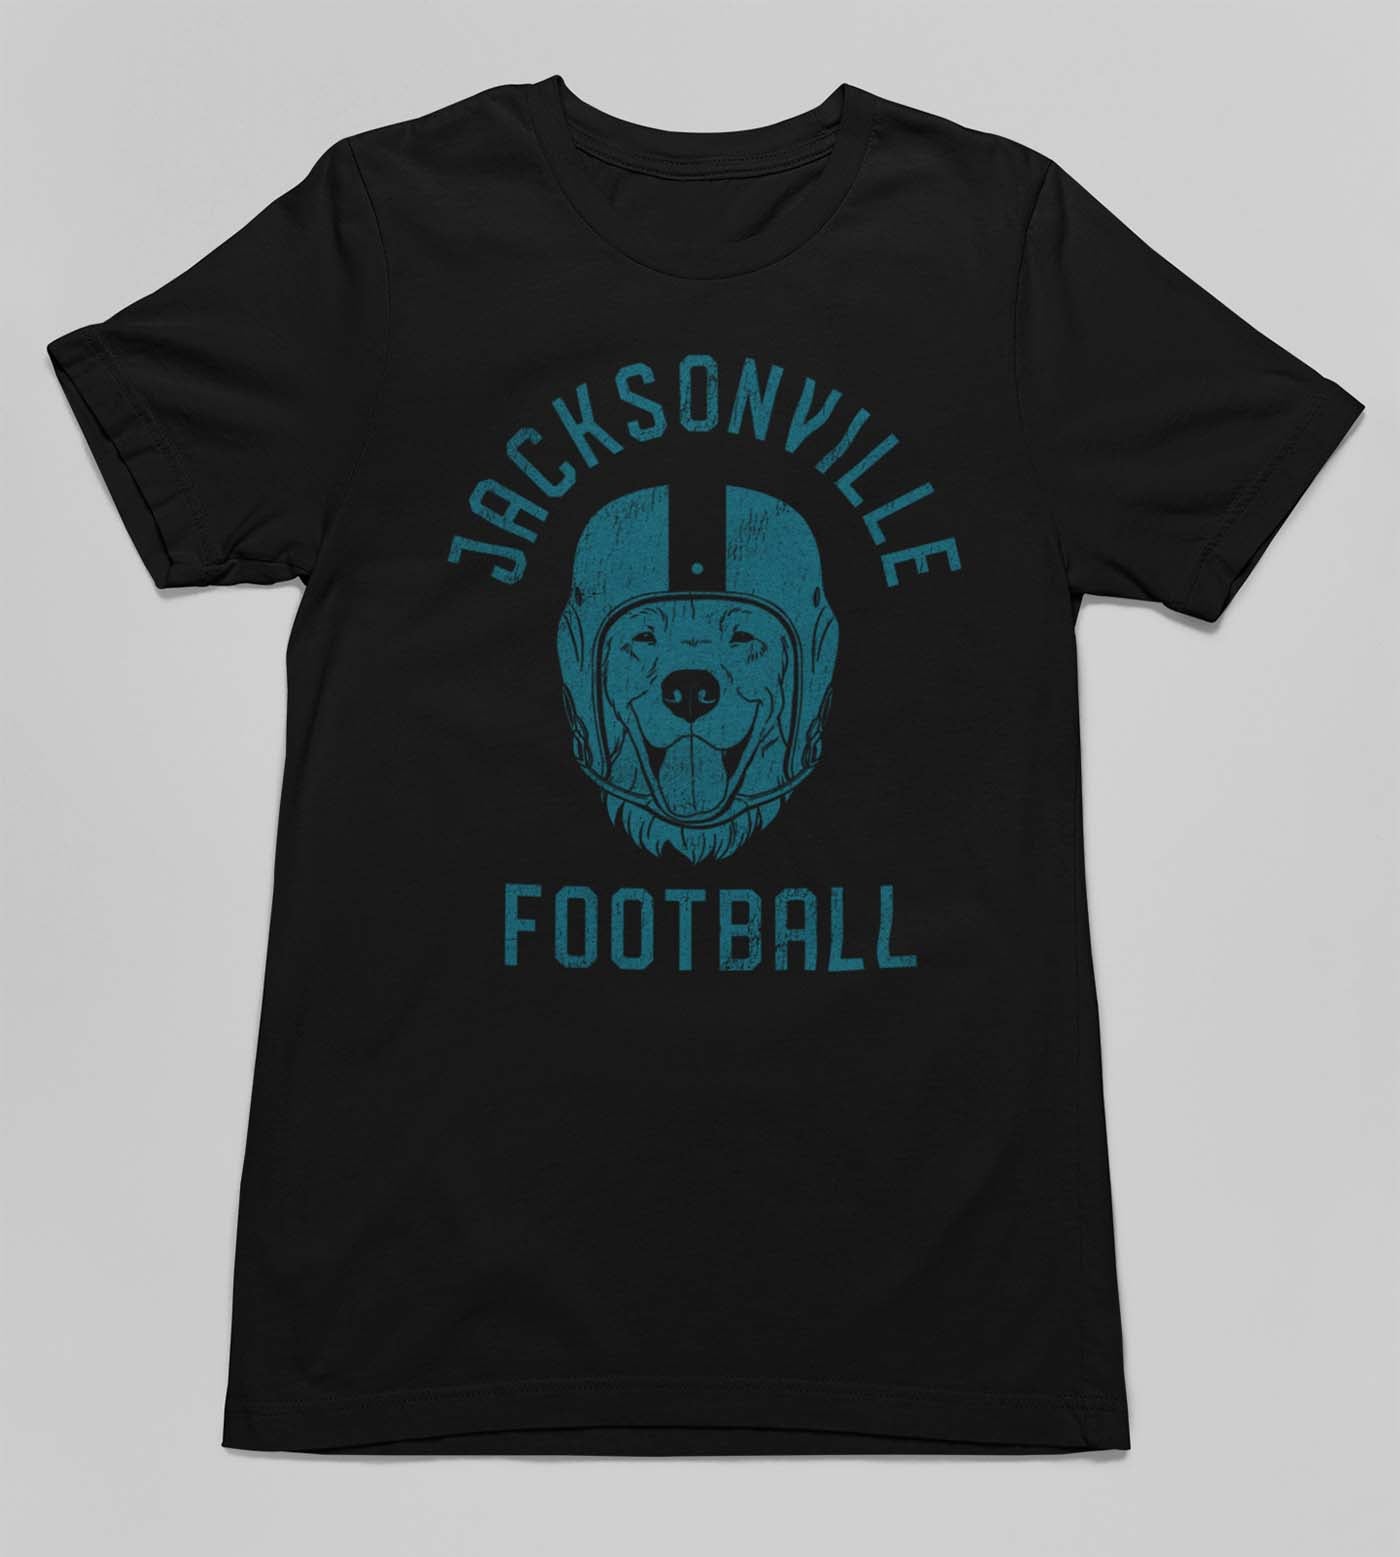 Jacksonville Football Golden Retriever T-Shirt